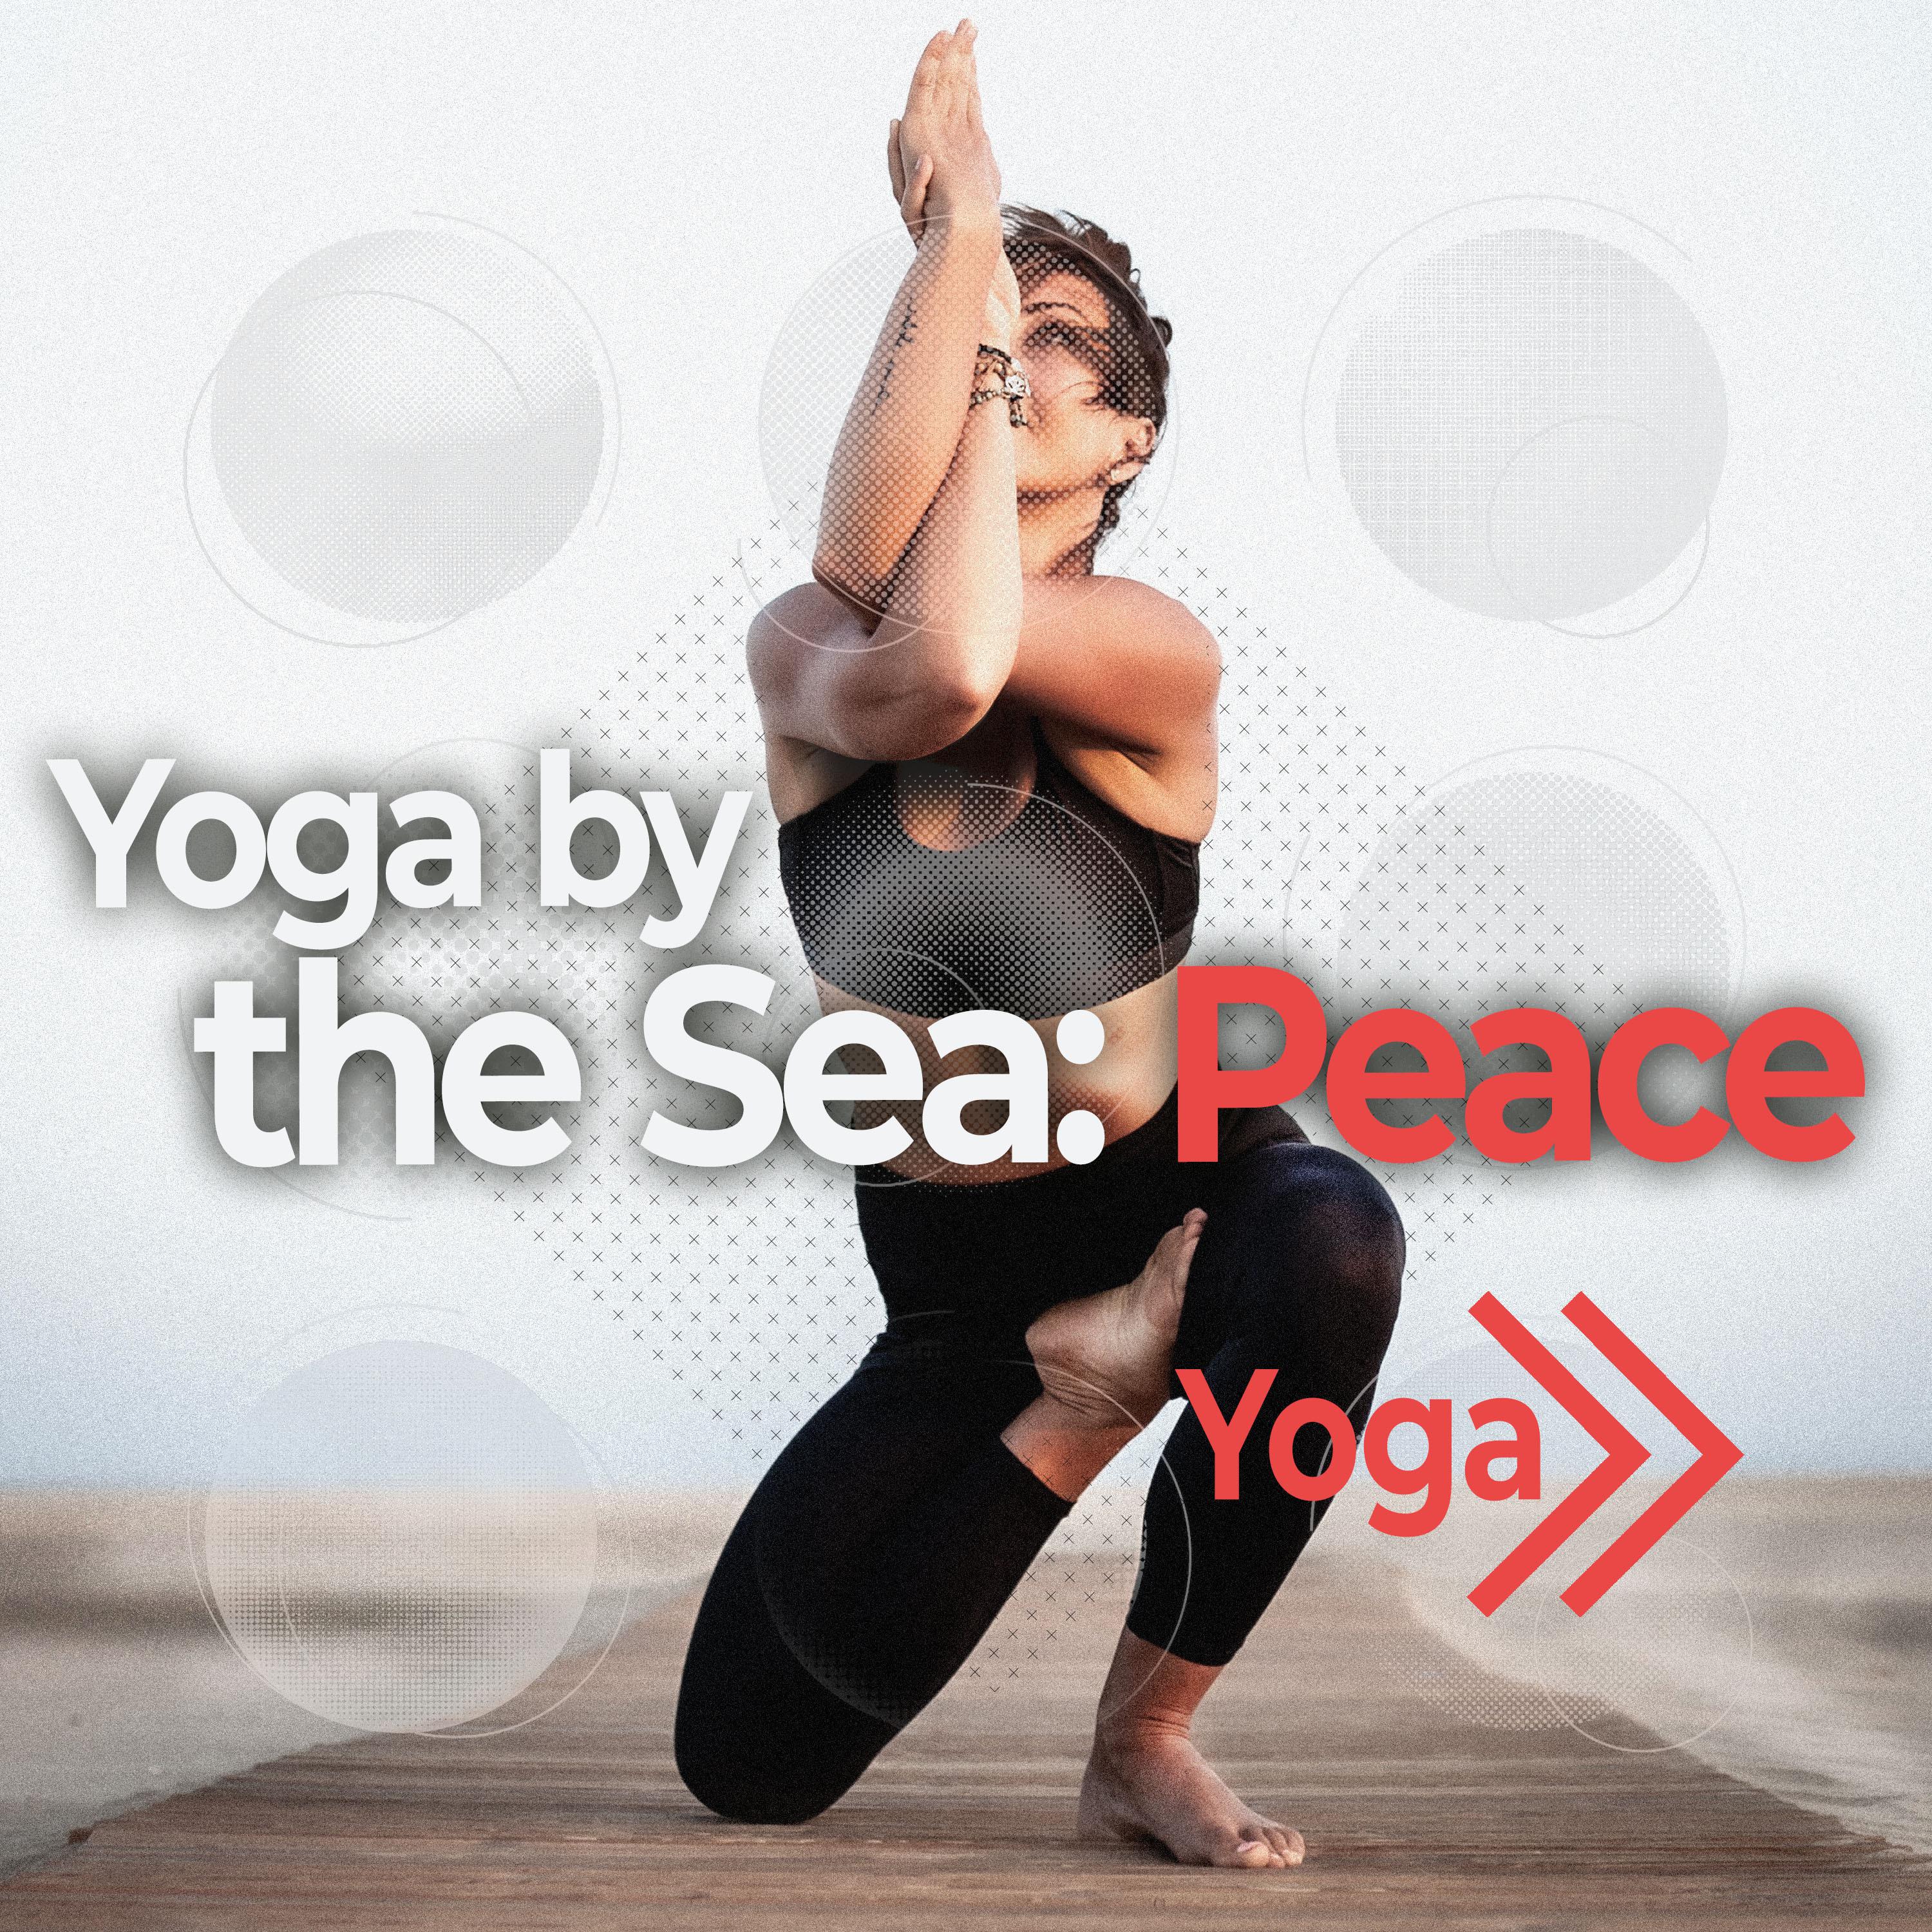 Yoga by the Sea: Peace